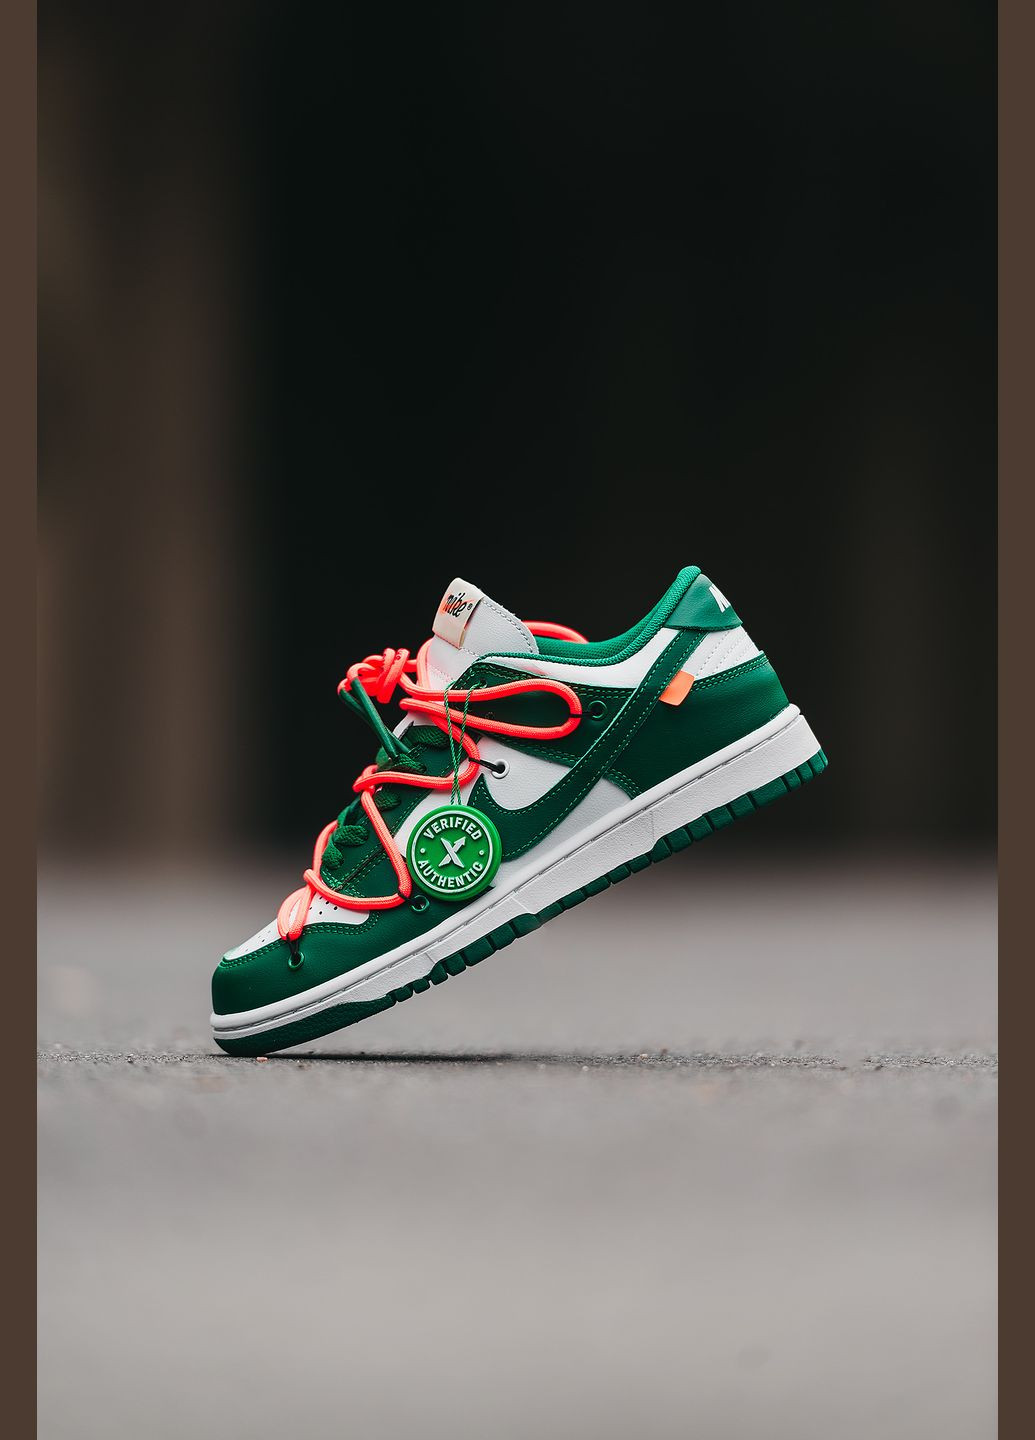 Зеленые кроссовки унисекс Nike Dunk Low x Off-White